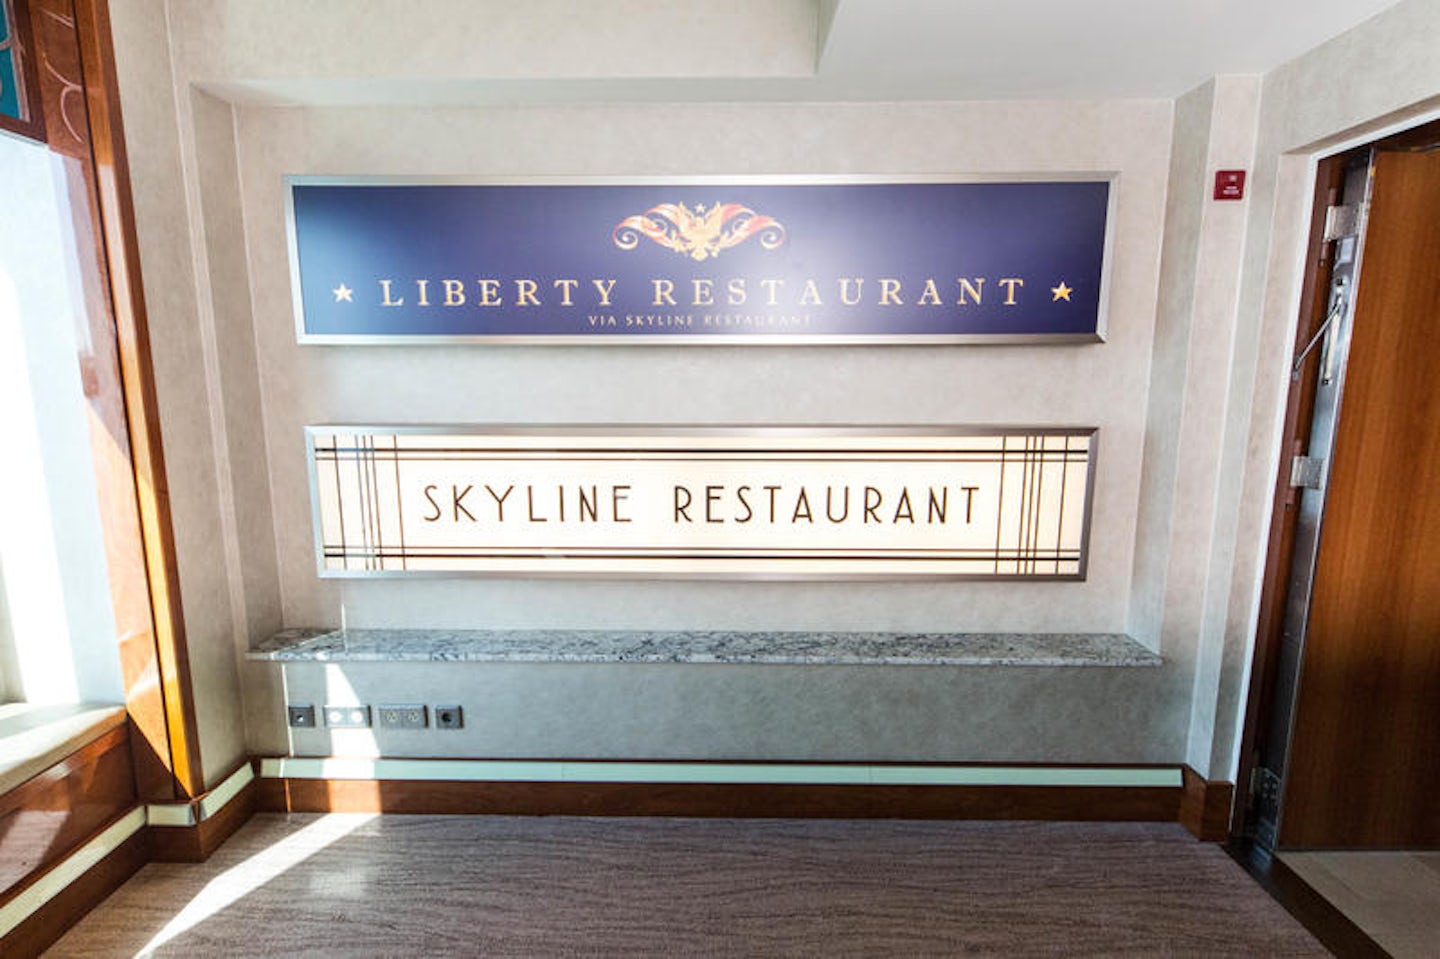 Liberty Restaurant on Pride of America